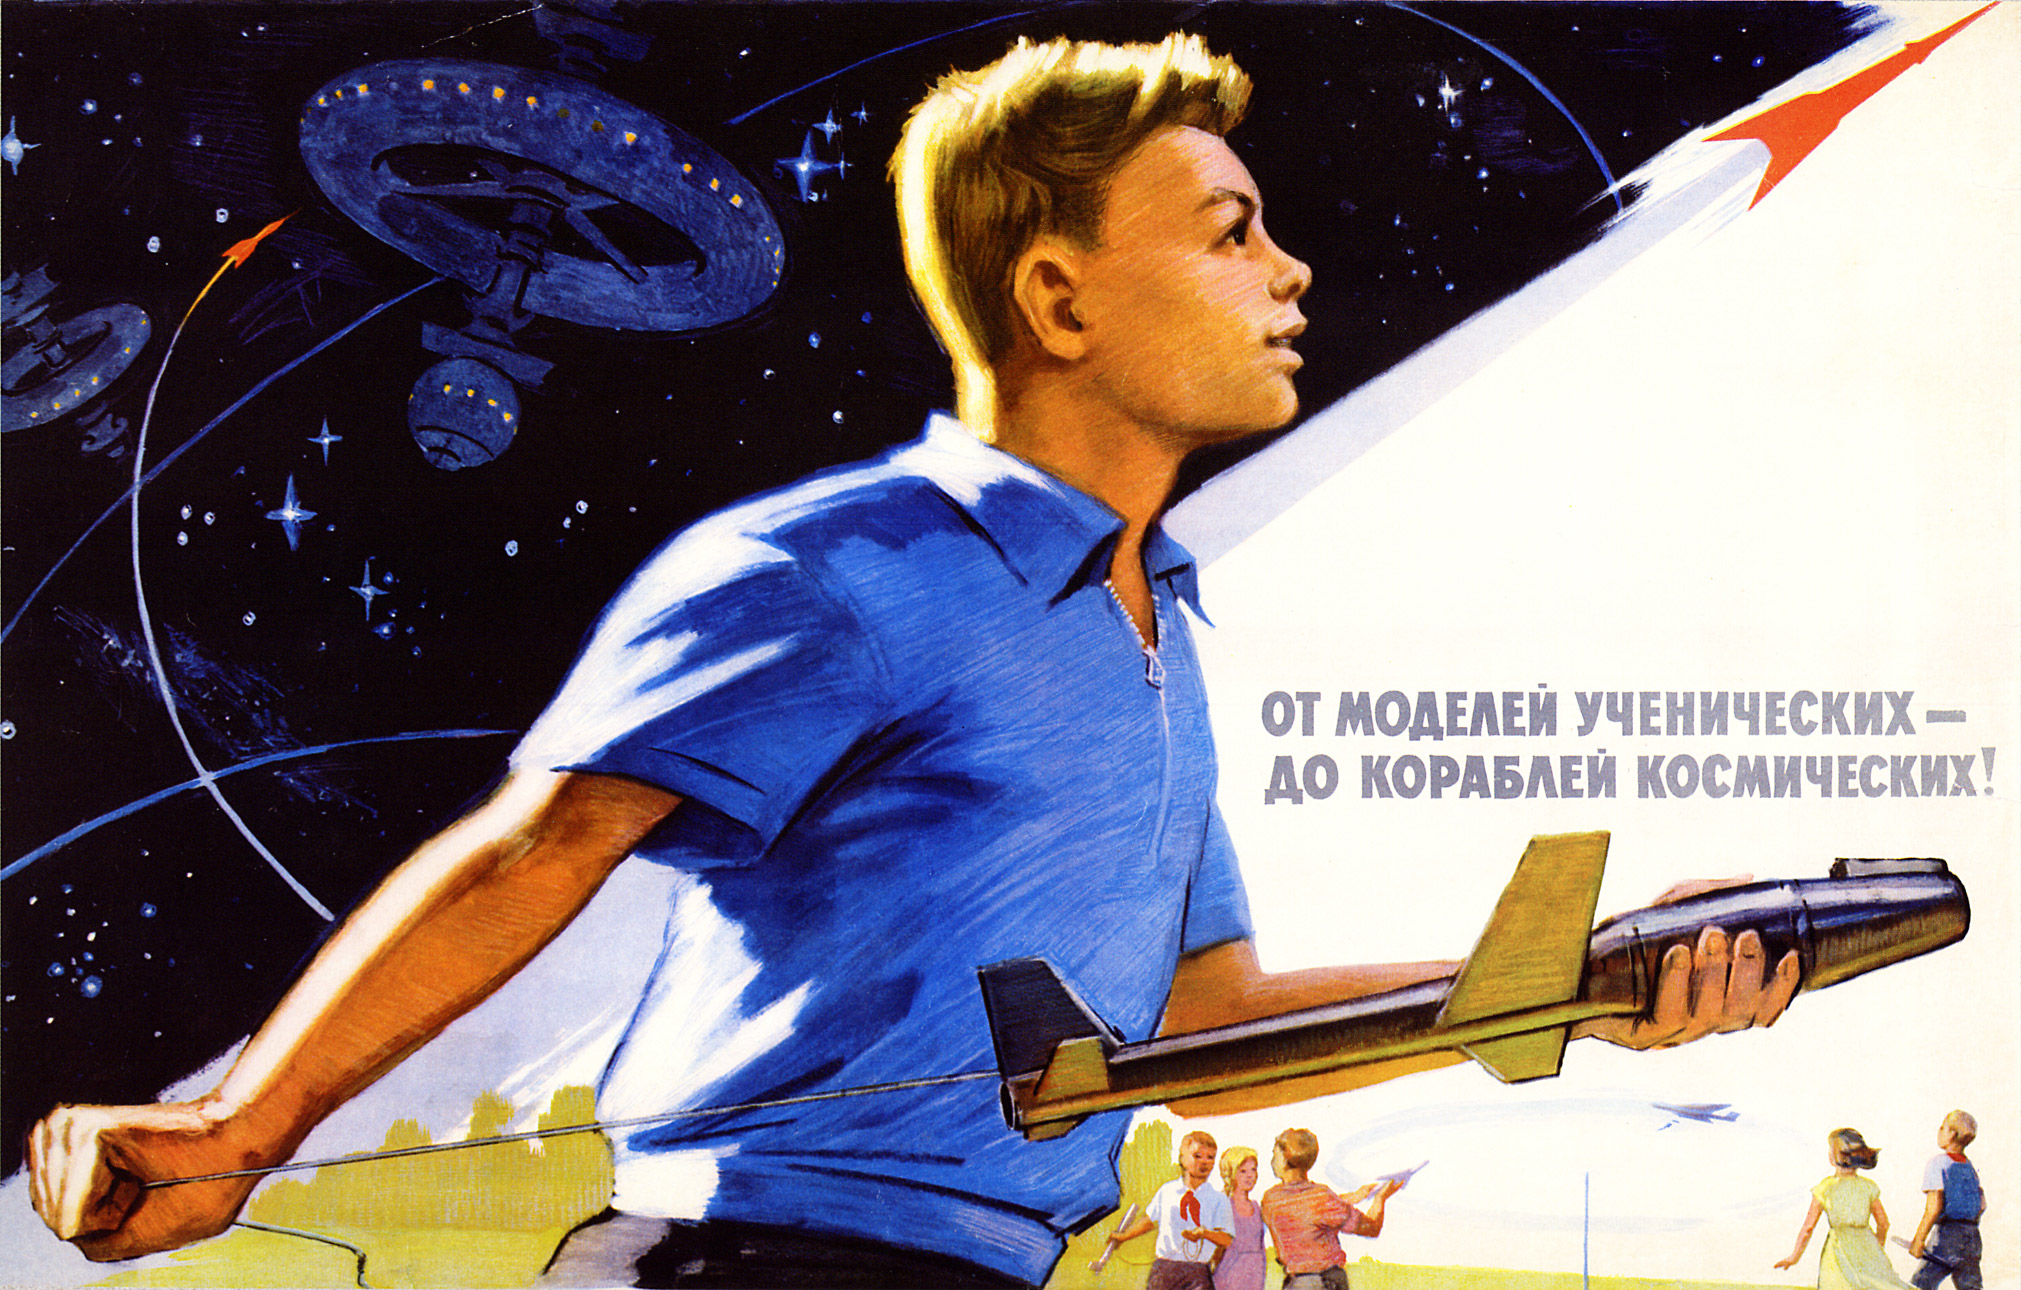 soviet-space-program-propaganda-poster-2